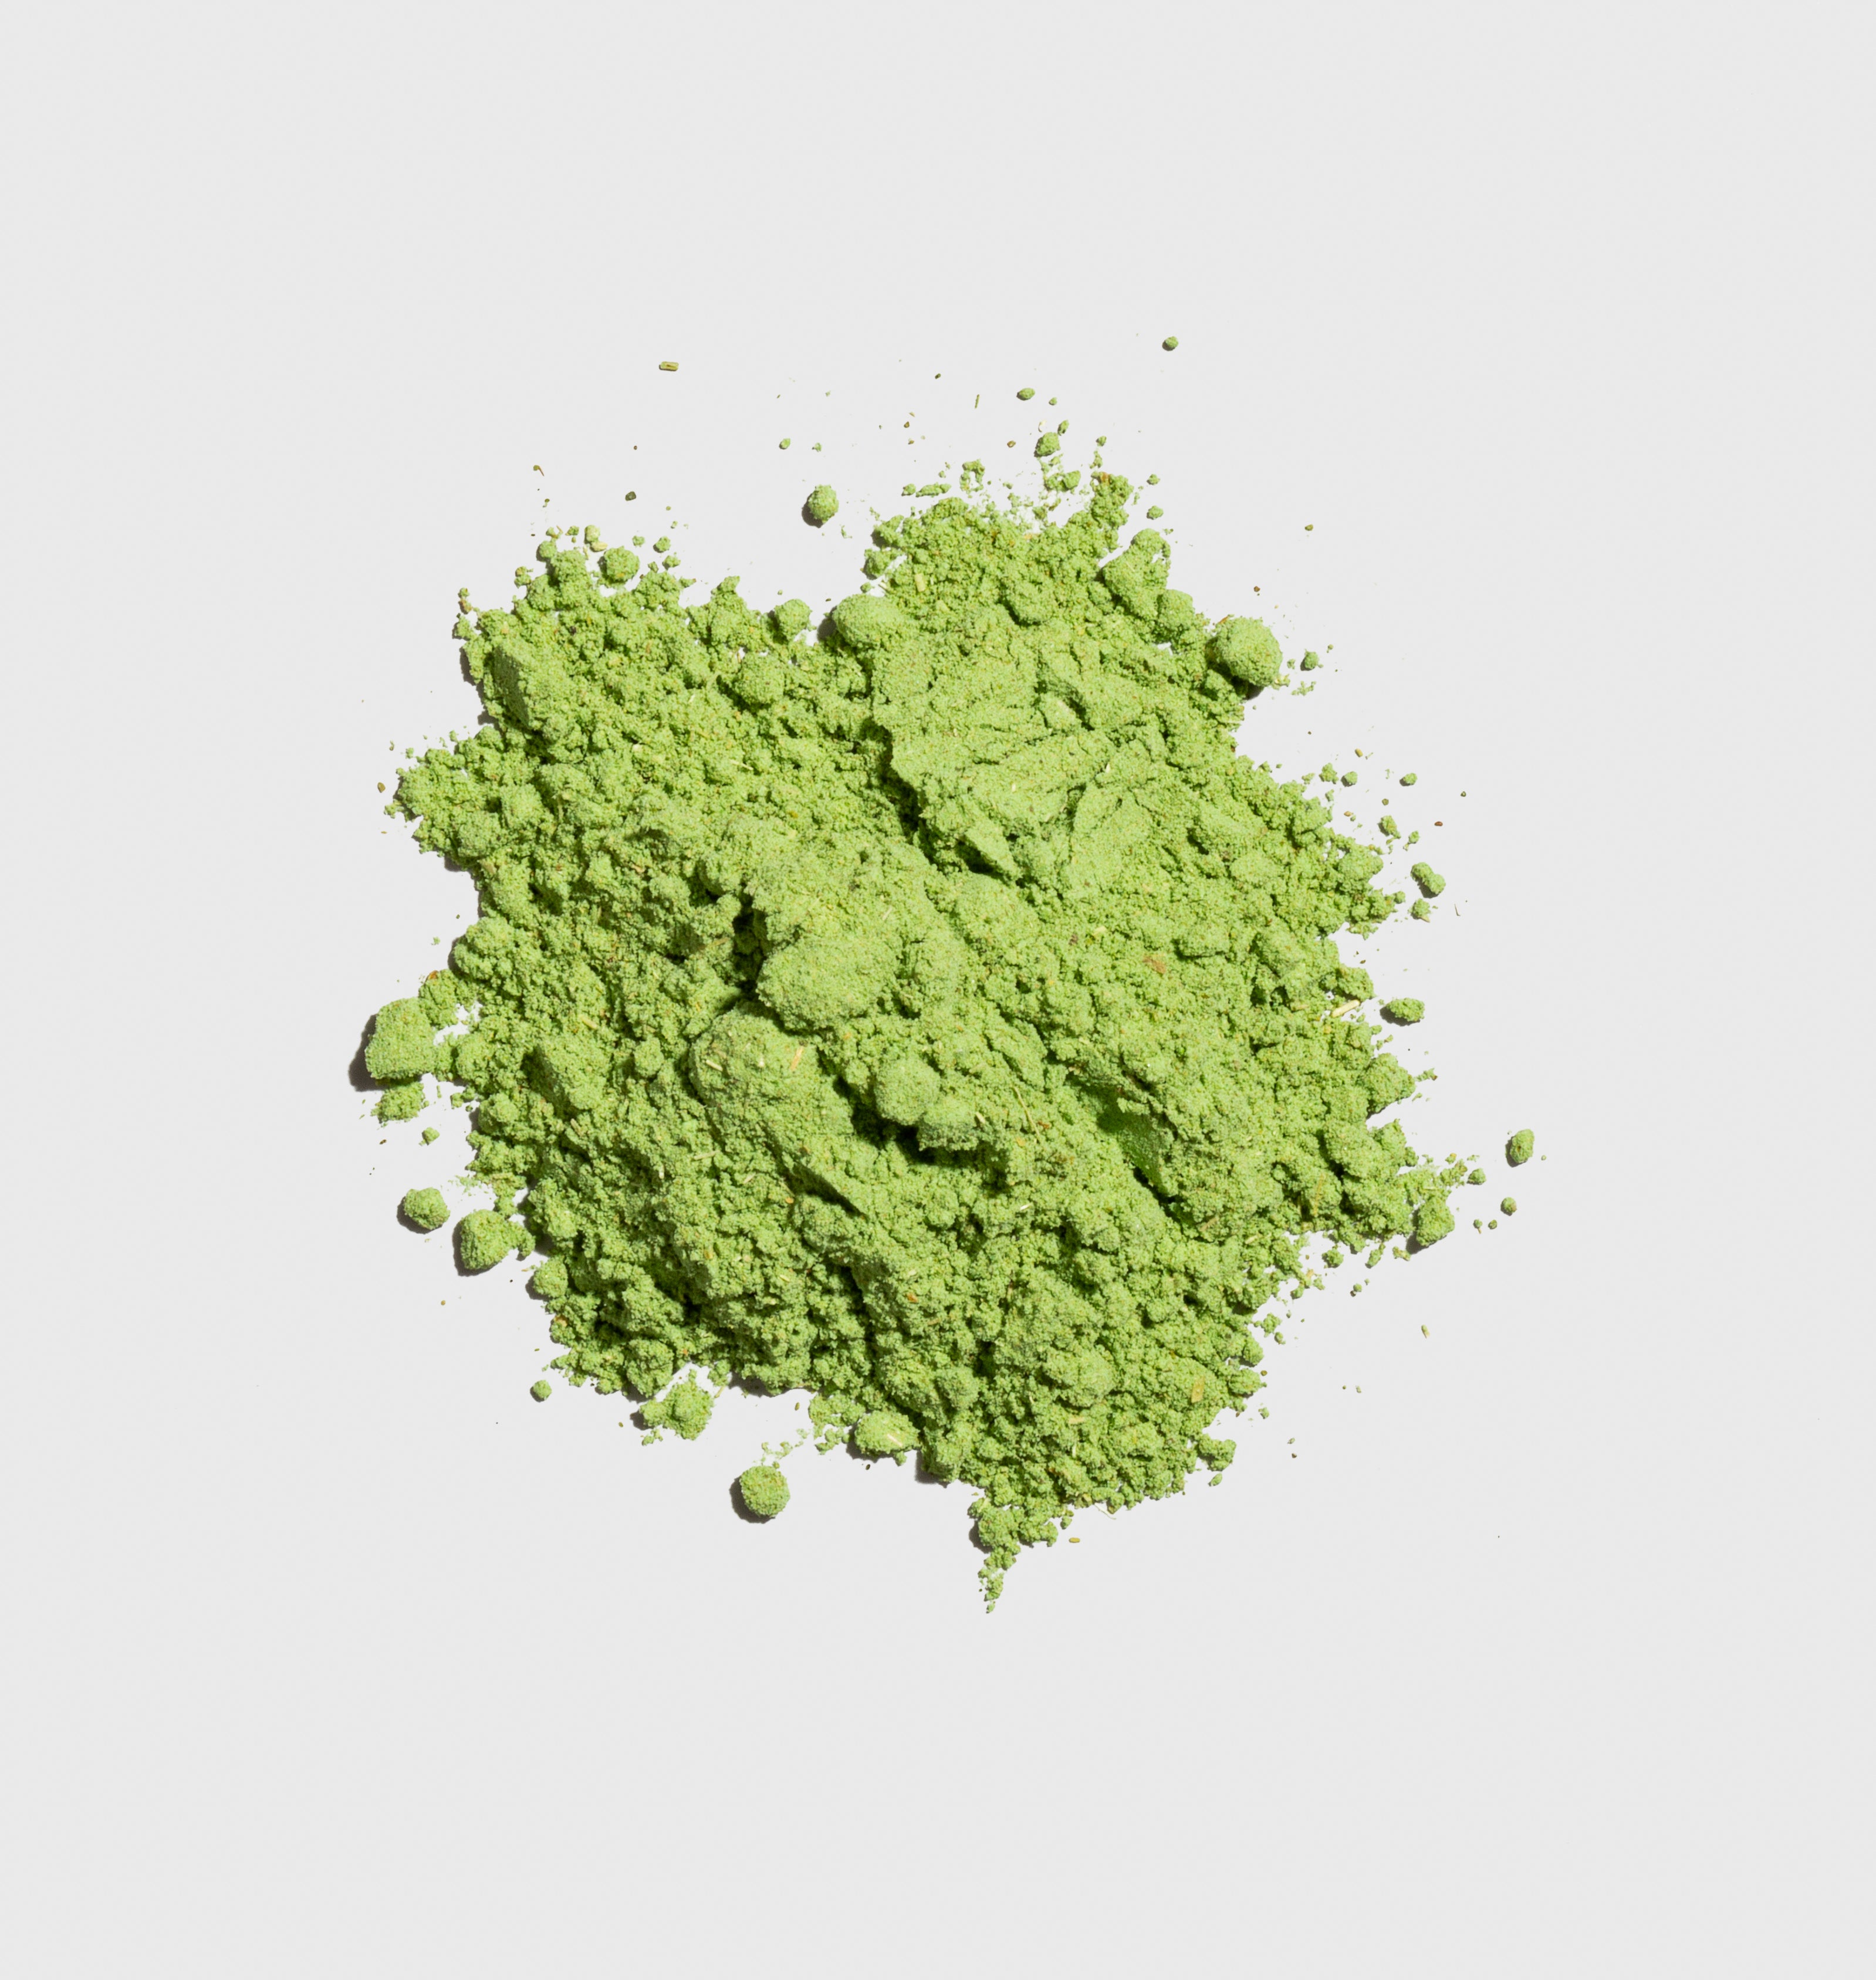 Moringa leaf powder